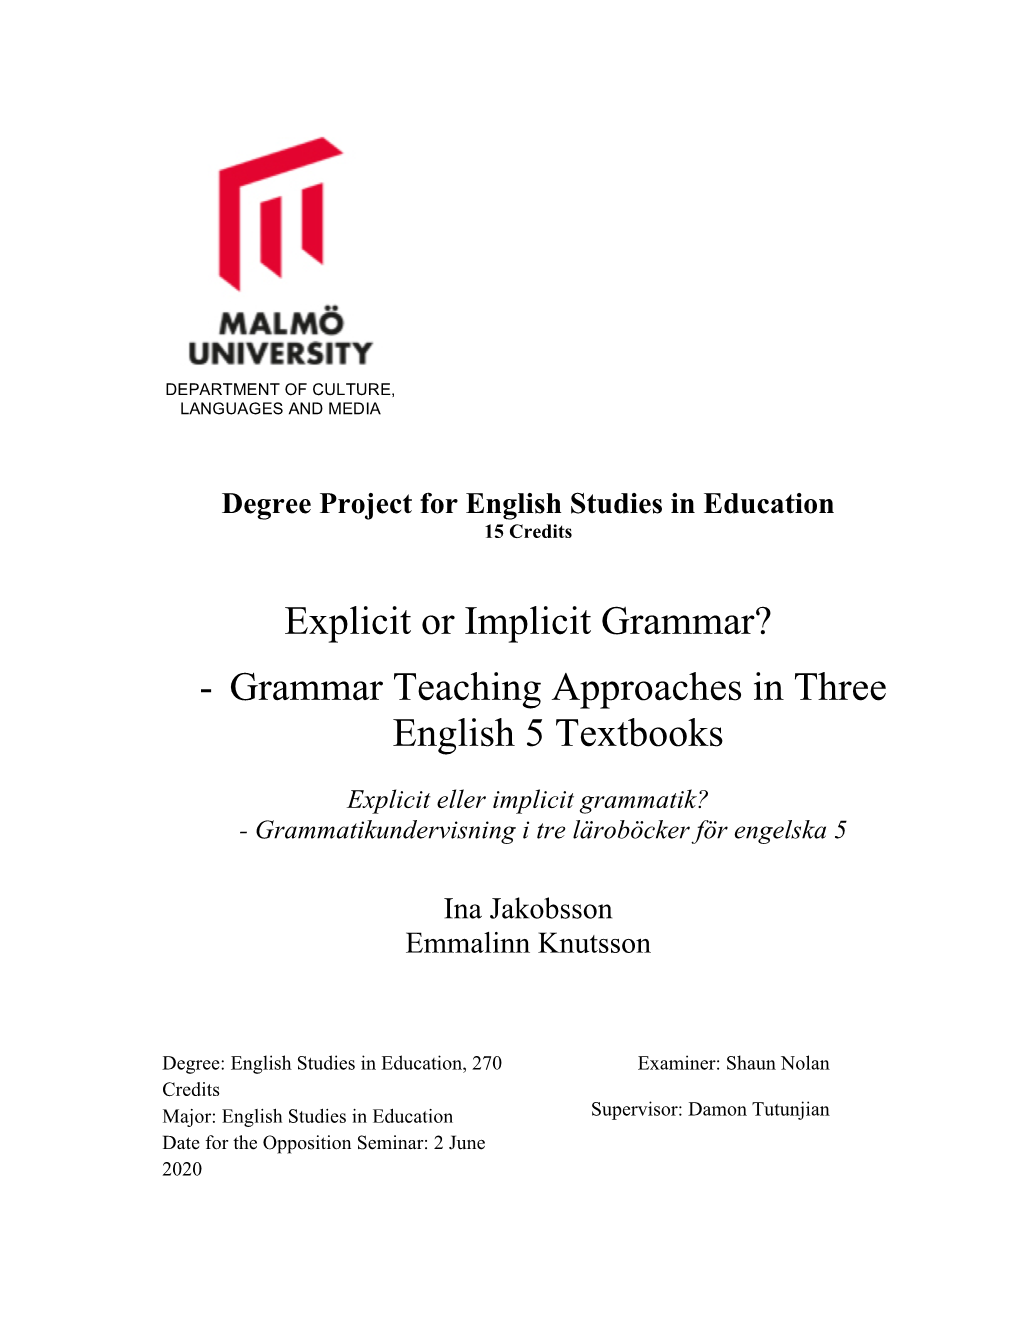 Explicit Or Implicit Grammar? - Grammar Teaching Approaches in Three English 5 Textbooks